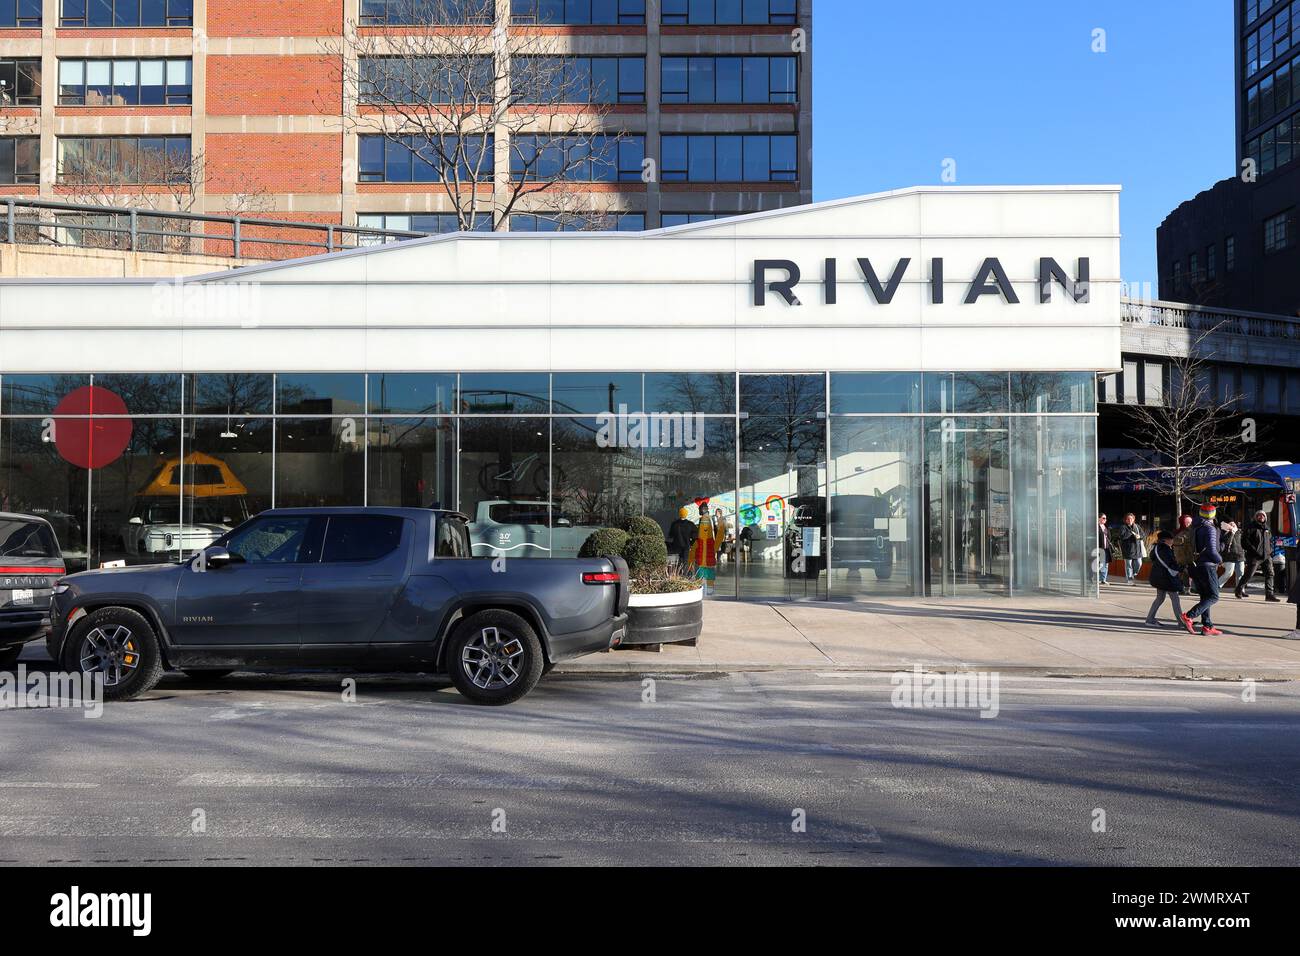 Rivian Automotive electric vehicle showroom, 60 10th Ave, in Manhattan's Chelsea neighborhood, New York City. Stock Photo